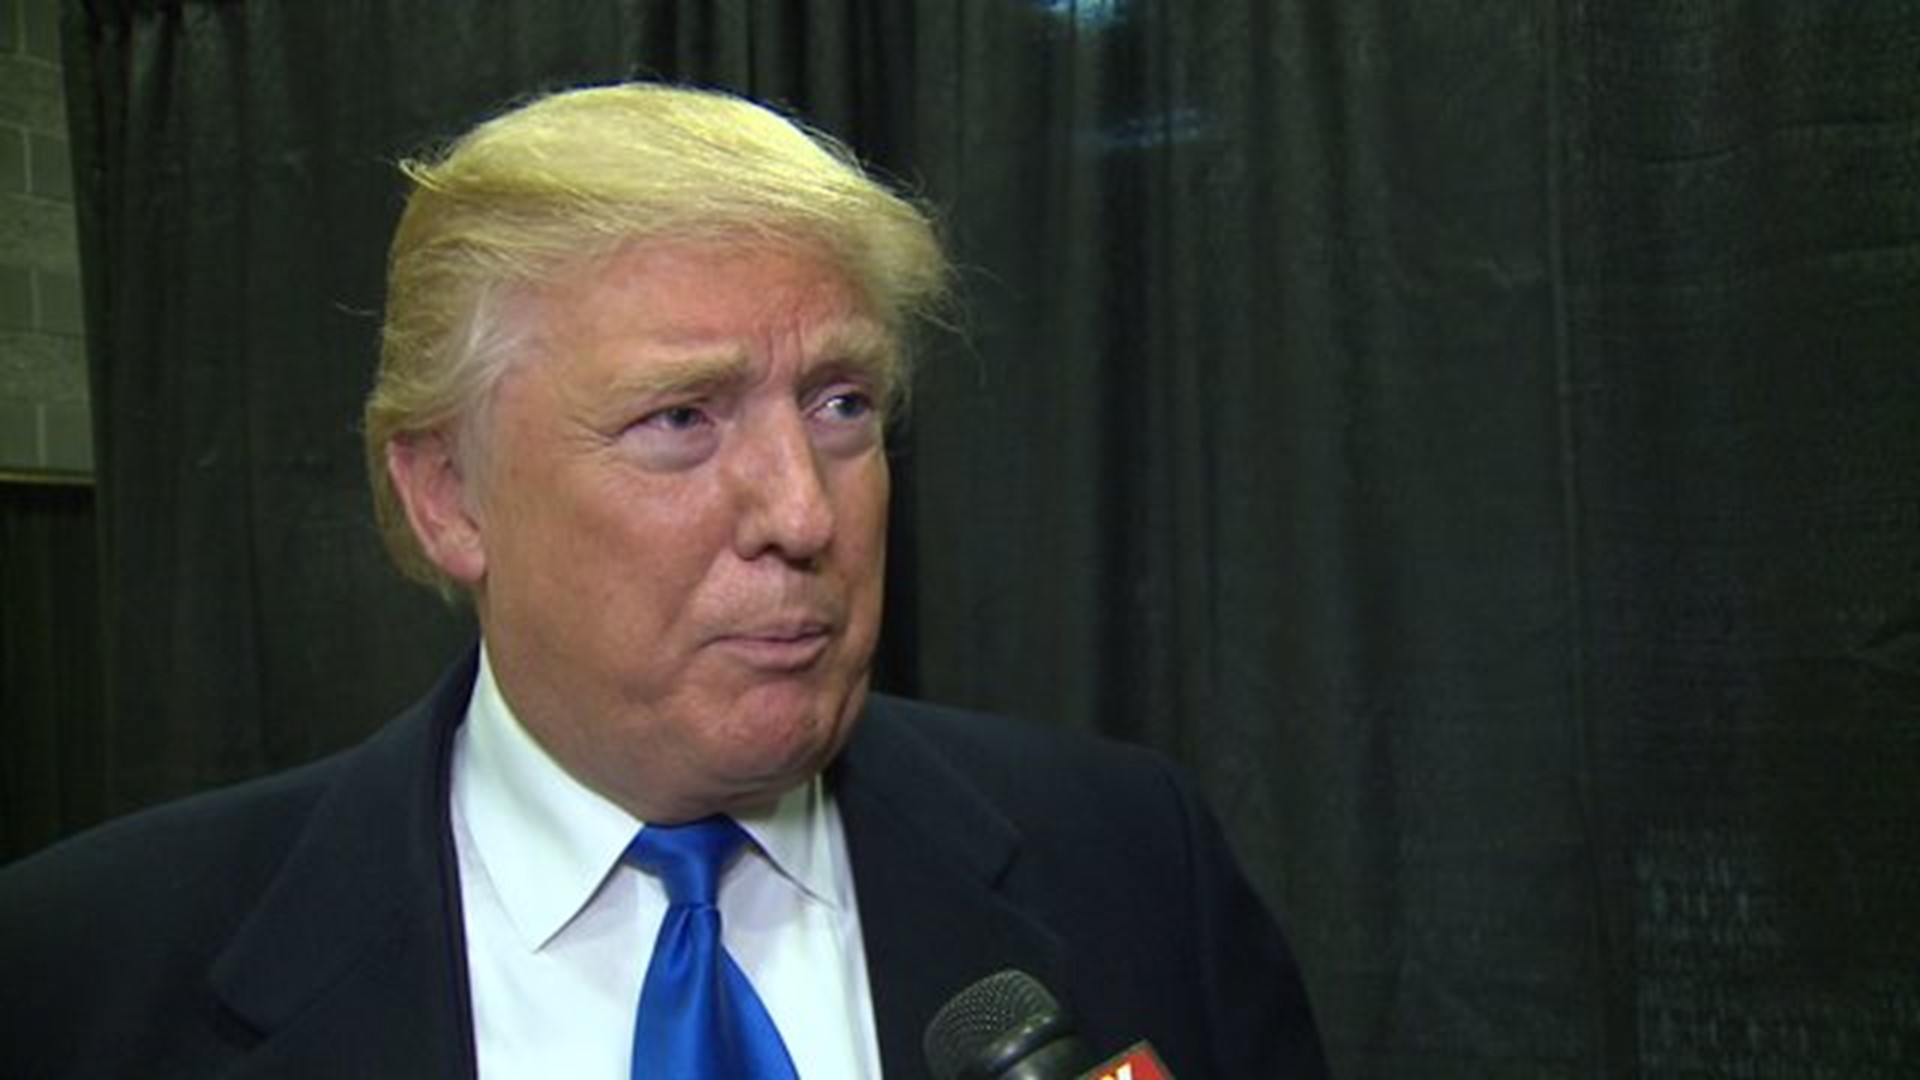 FOX 61 speaks 1-on-1 with Donald Trump